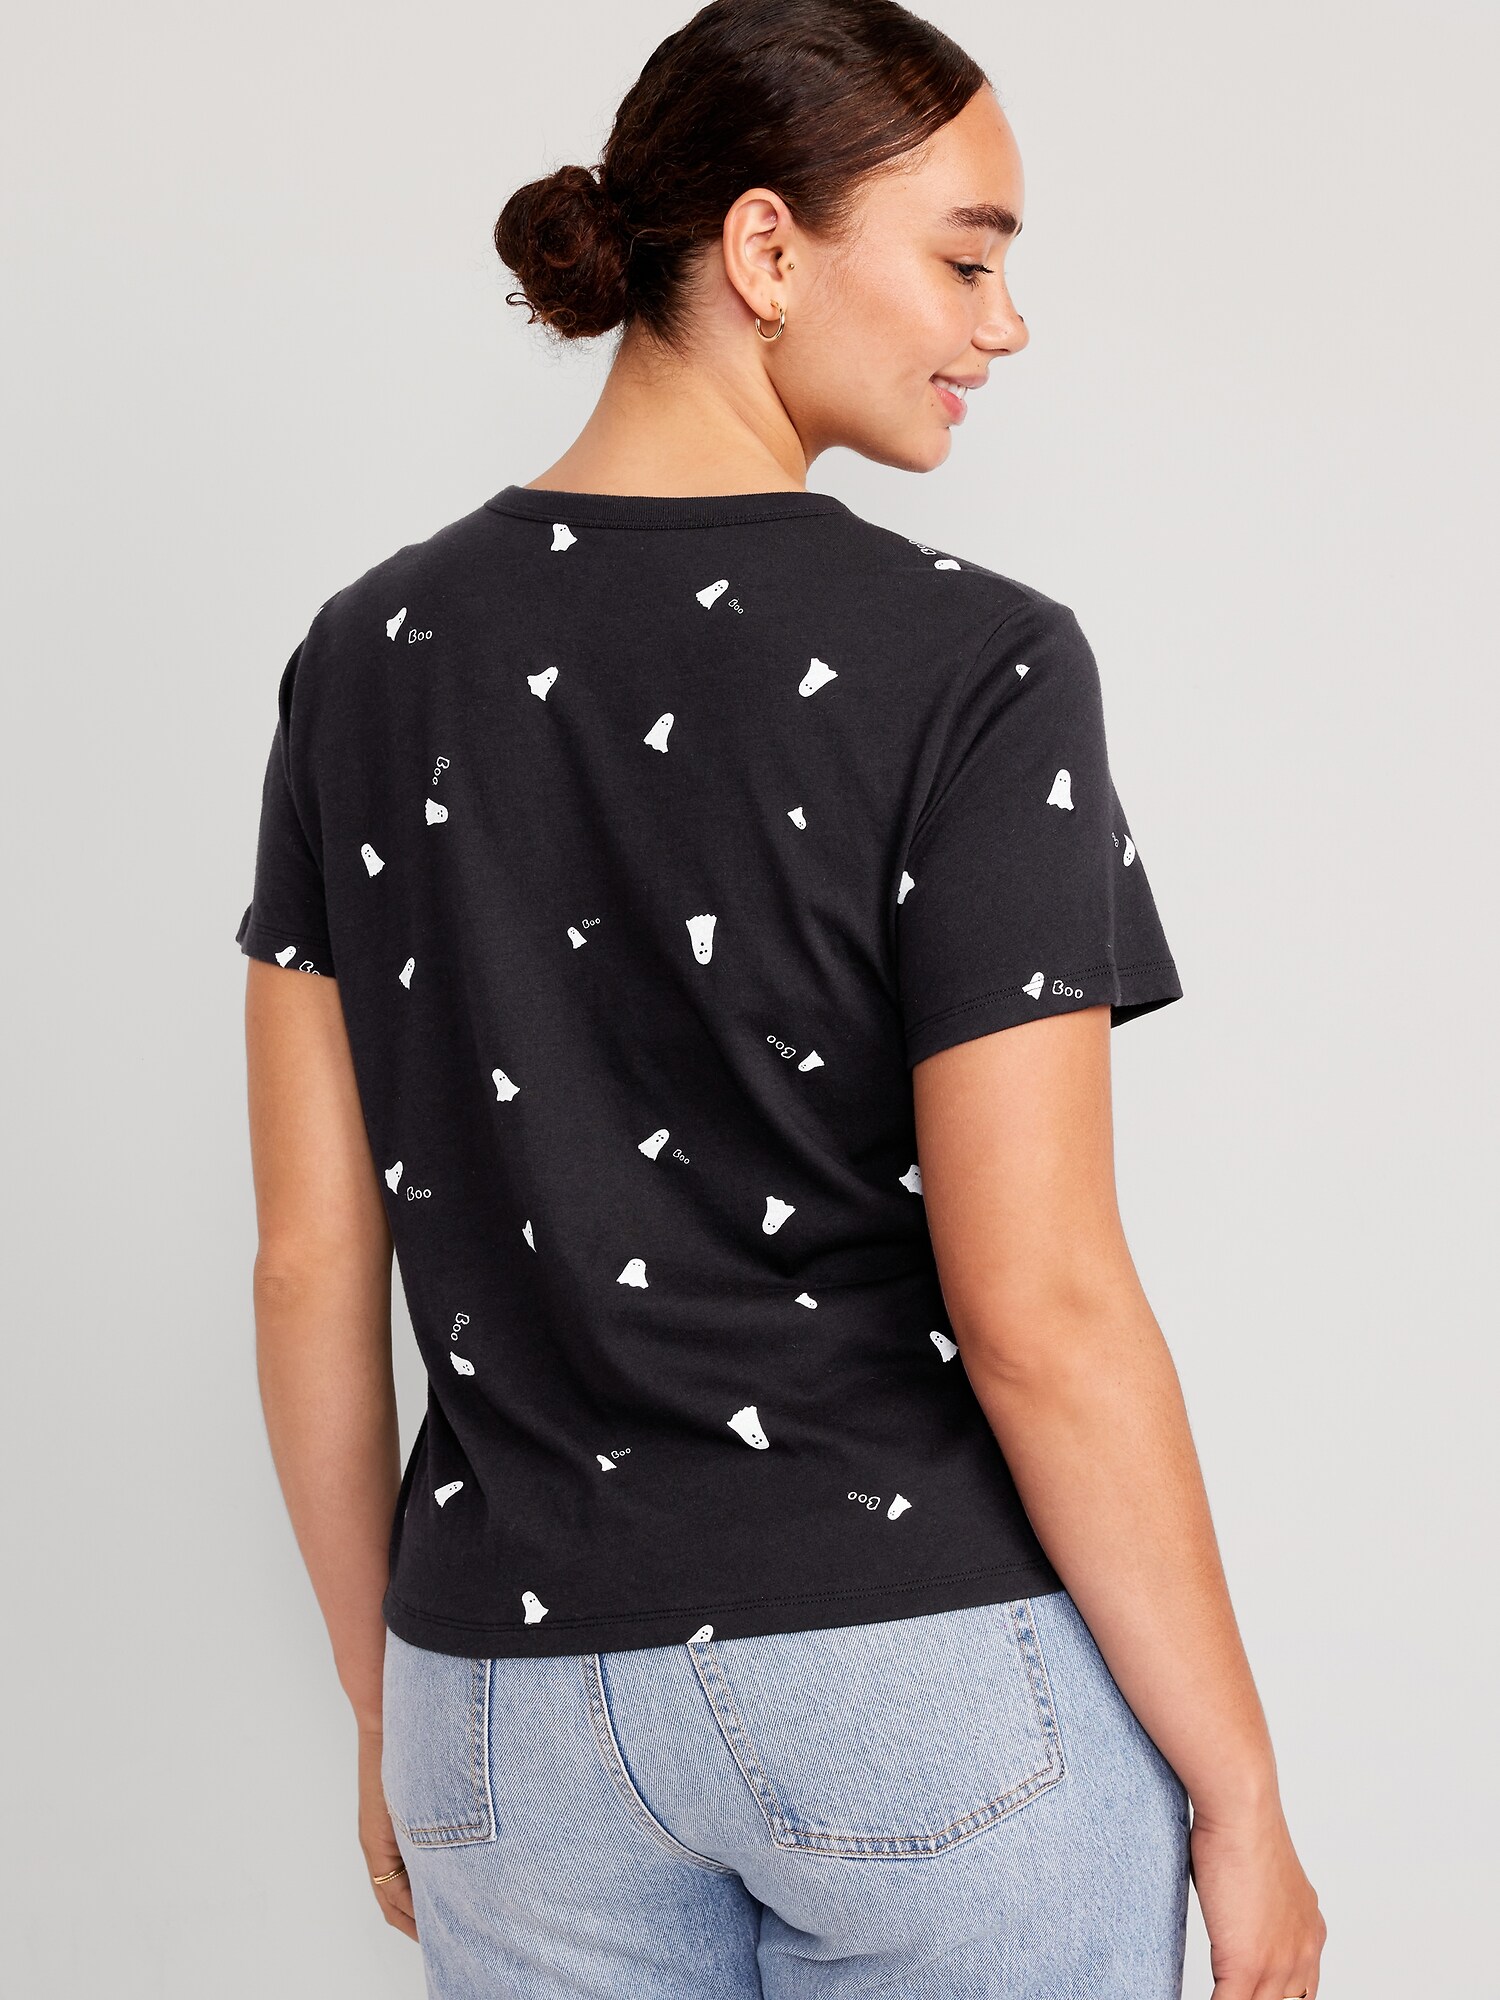 EveryWear Printed V-Neck T-Shirt for Women